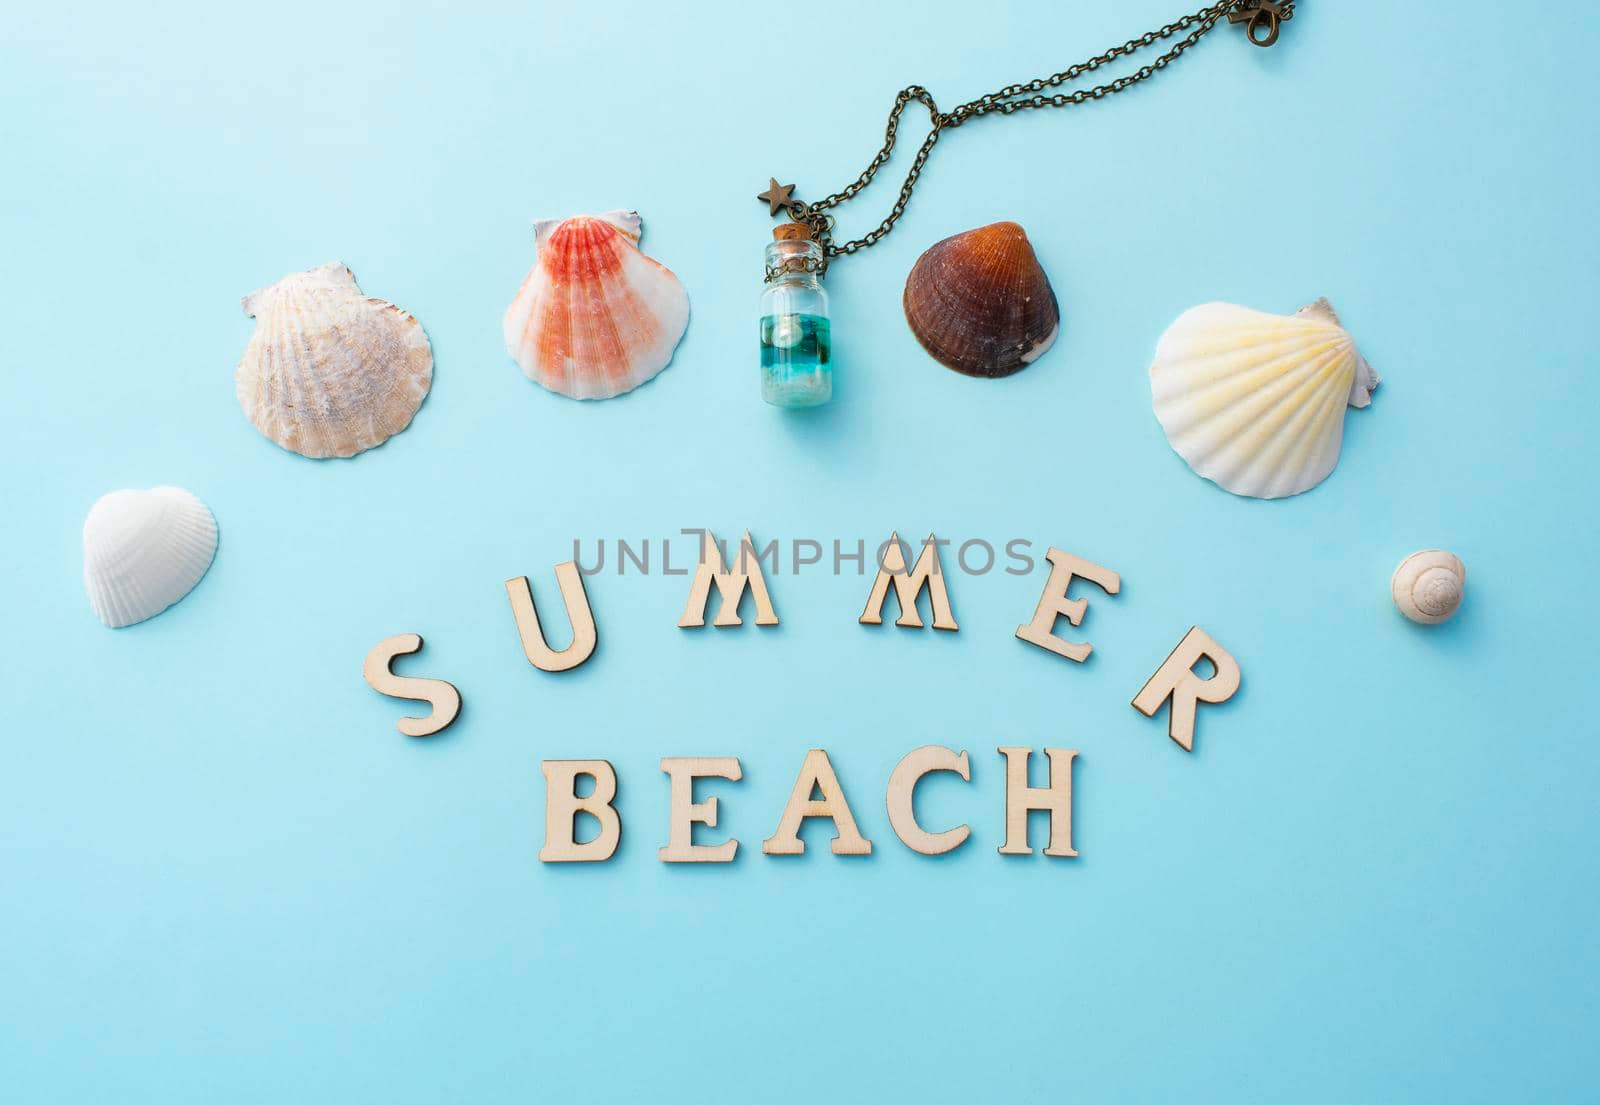 Summer beach wooden inscription. White shells and bottle decoration on light blue background.